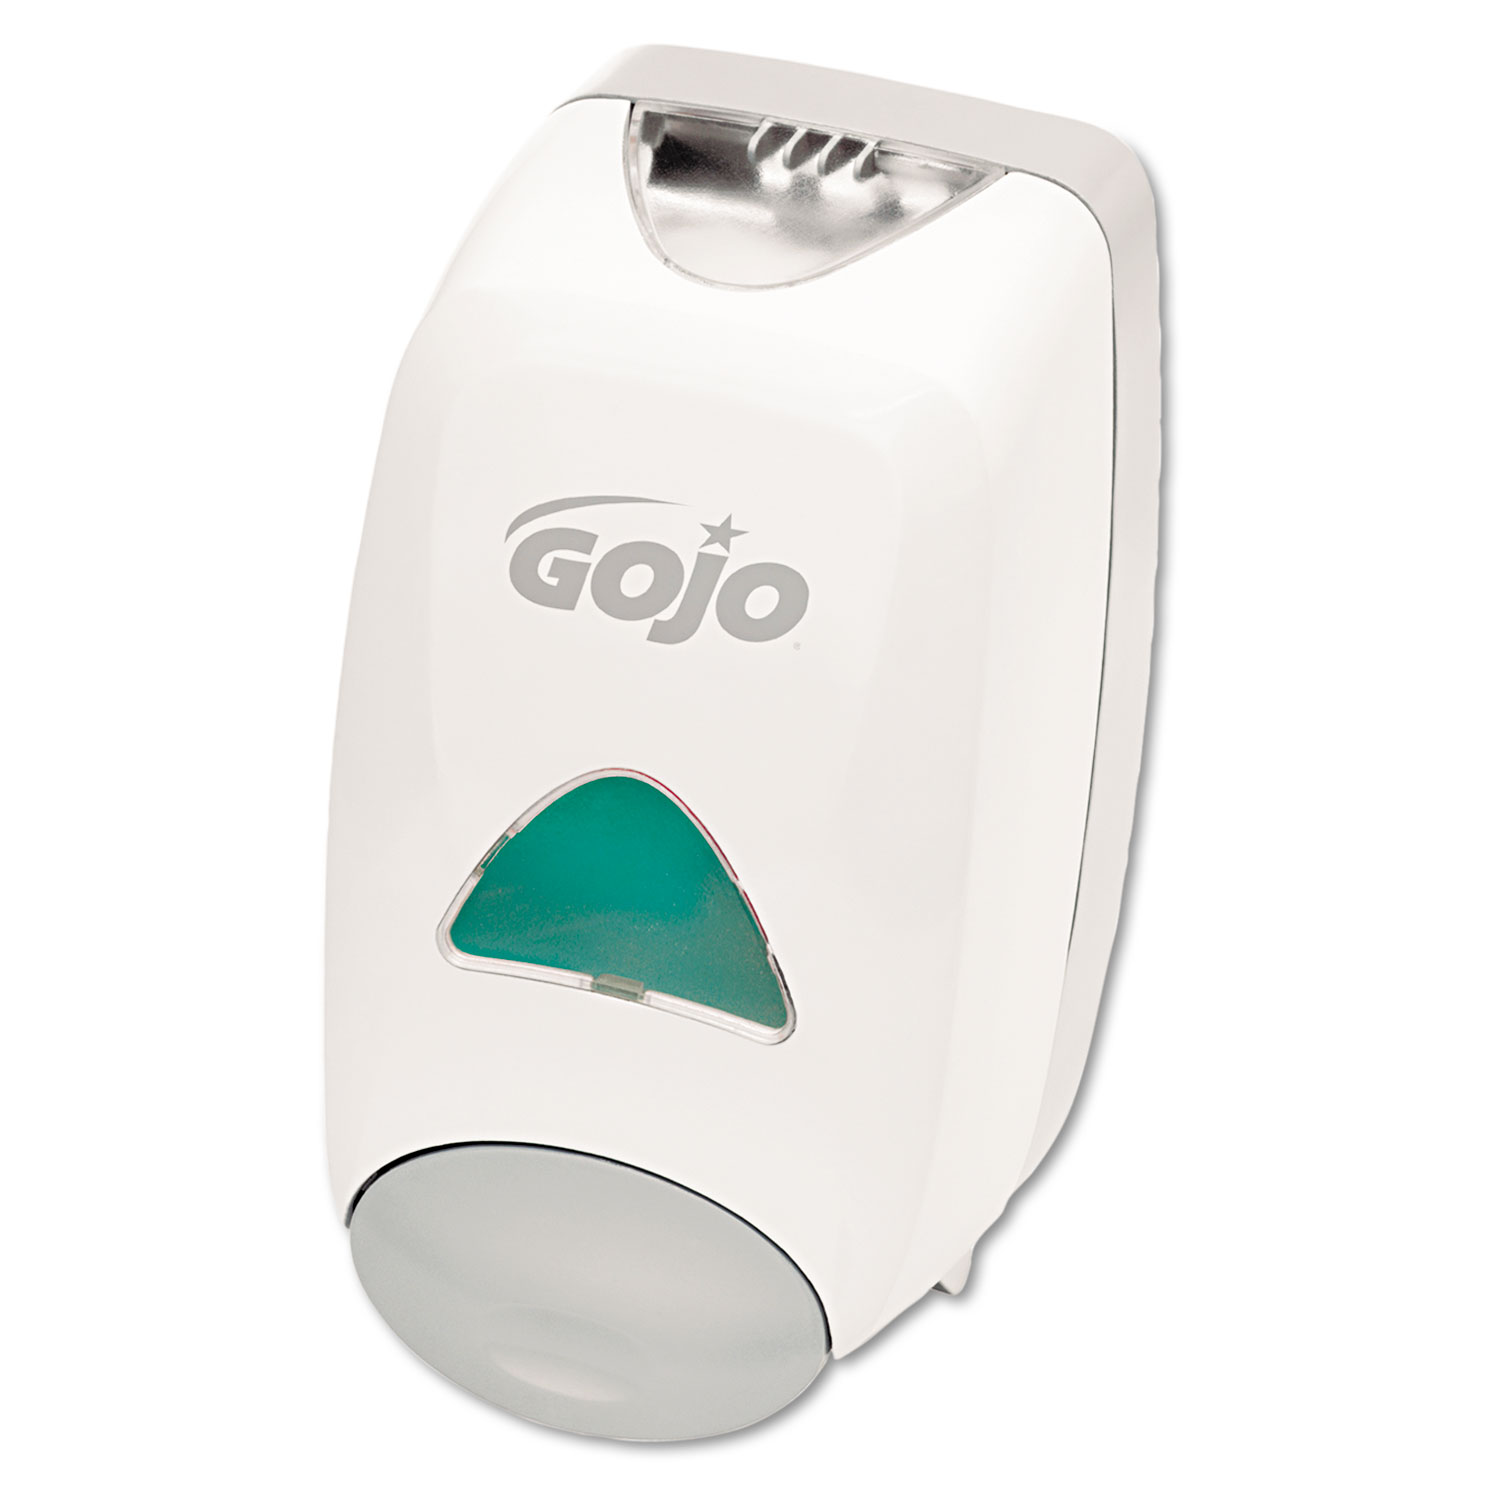  GOJO 5150-06 FMX-12 Soap Dispenser, 1250 mL, 6.12 x 5.13 x 10.5, Gray/White (GOJ515006) 